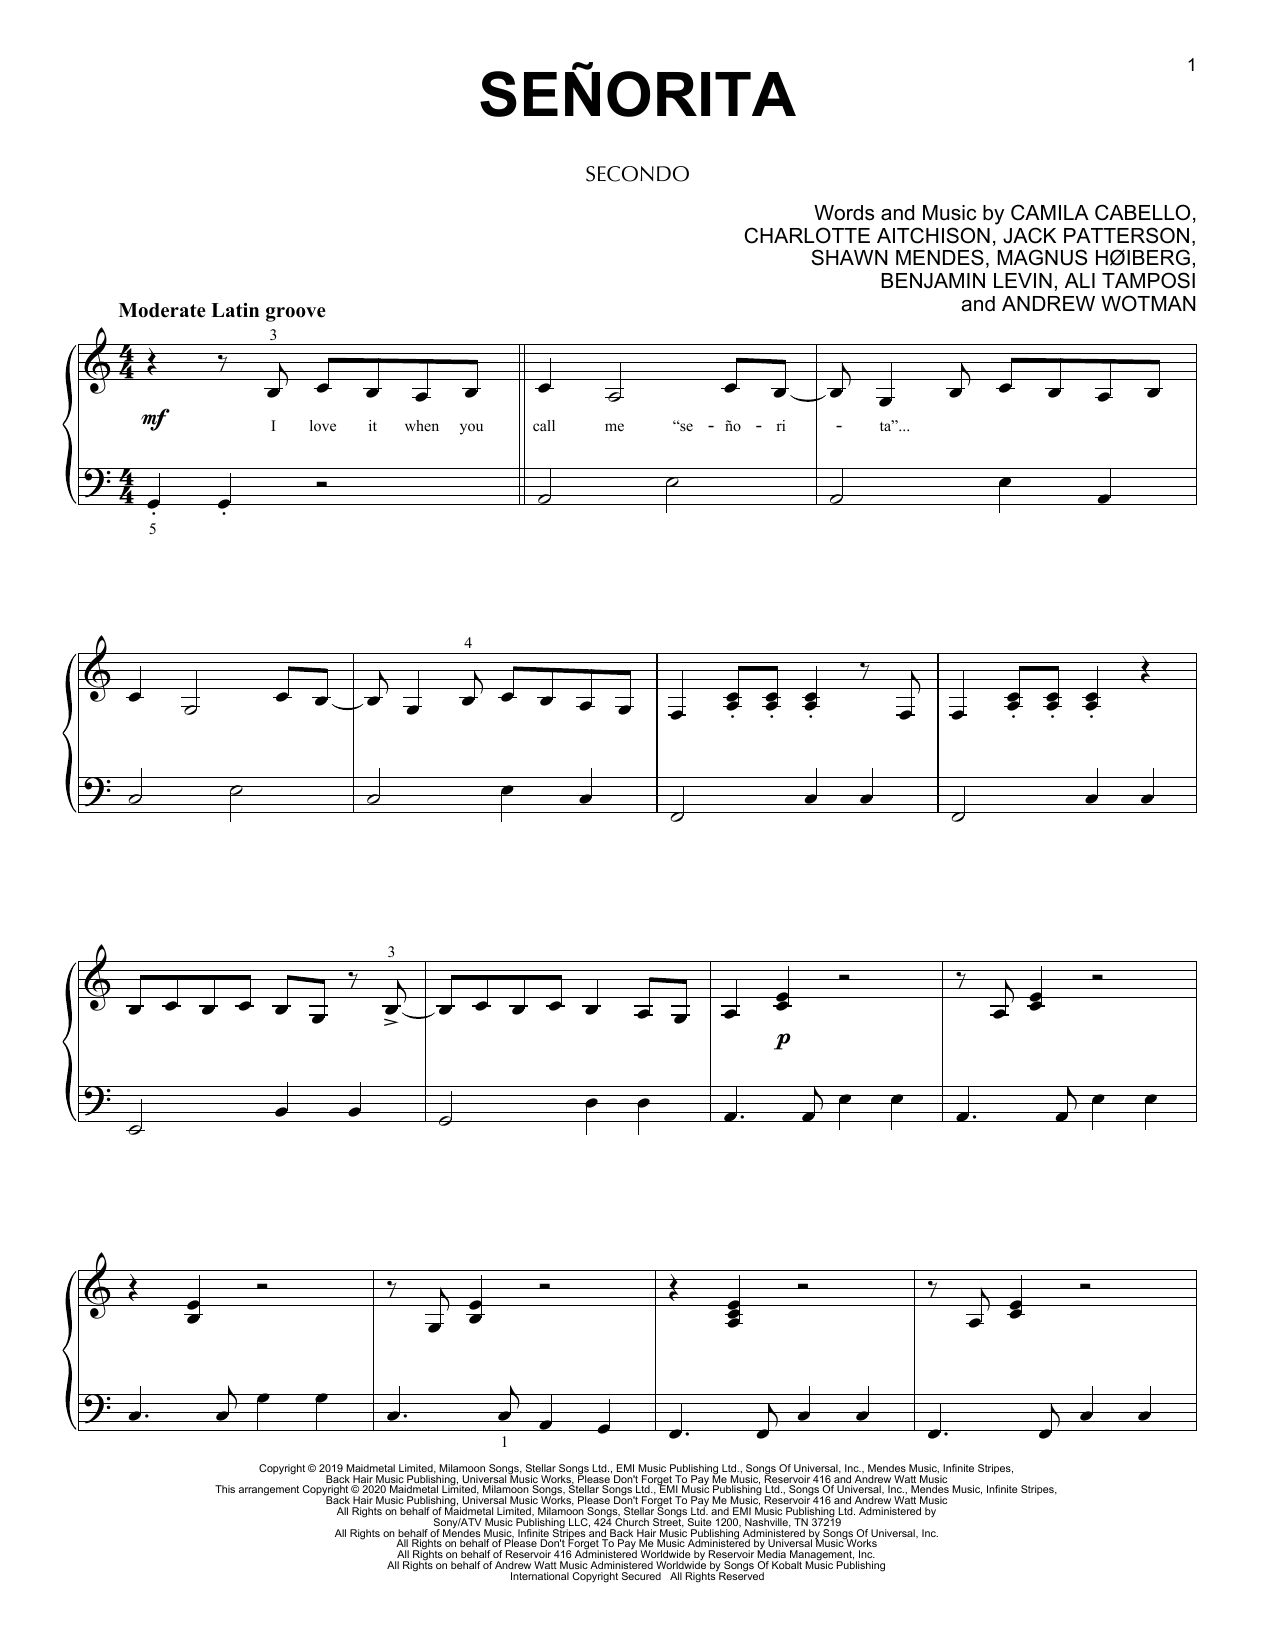 Shawn Mendes & Camila Cabello Señorita (arr. David Pearl) Sheet Music Notes & Chords for Piano Duet - Download or Print PDF